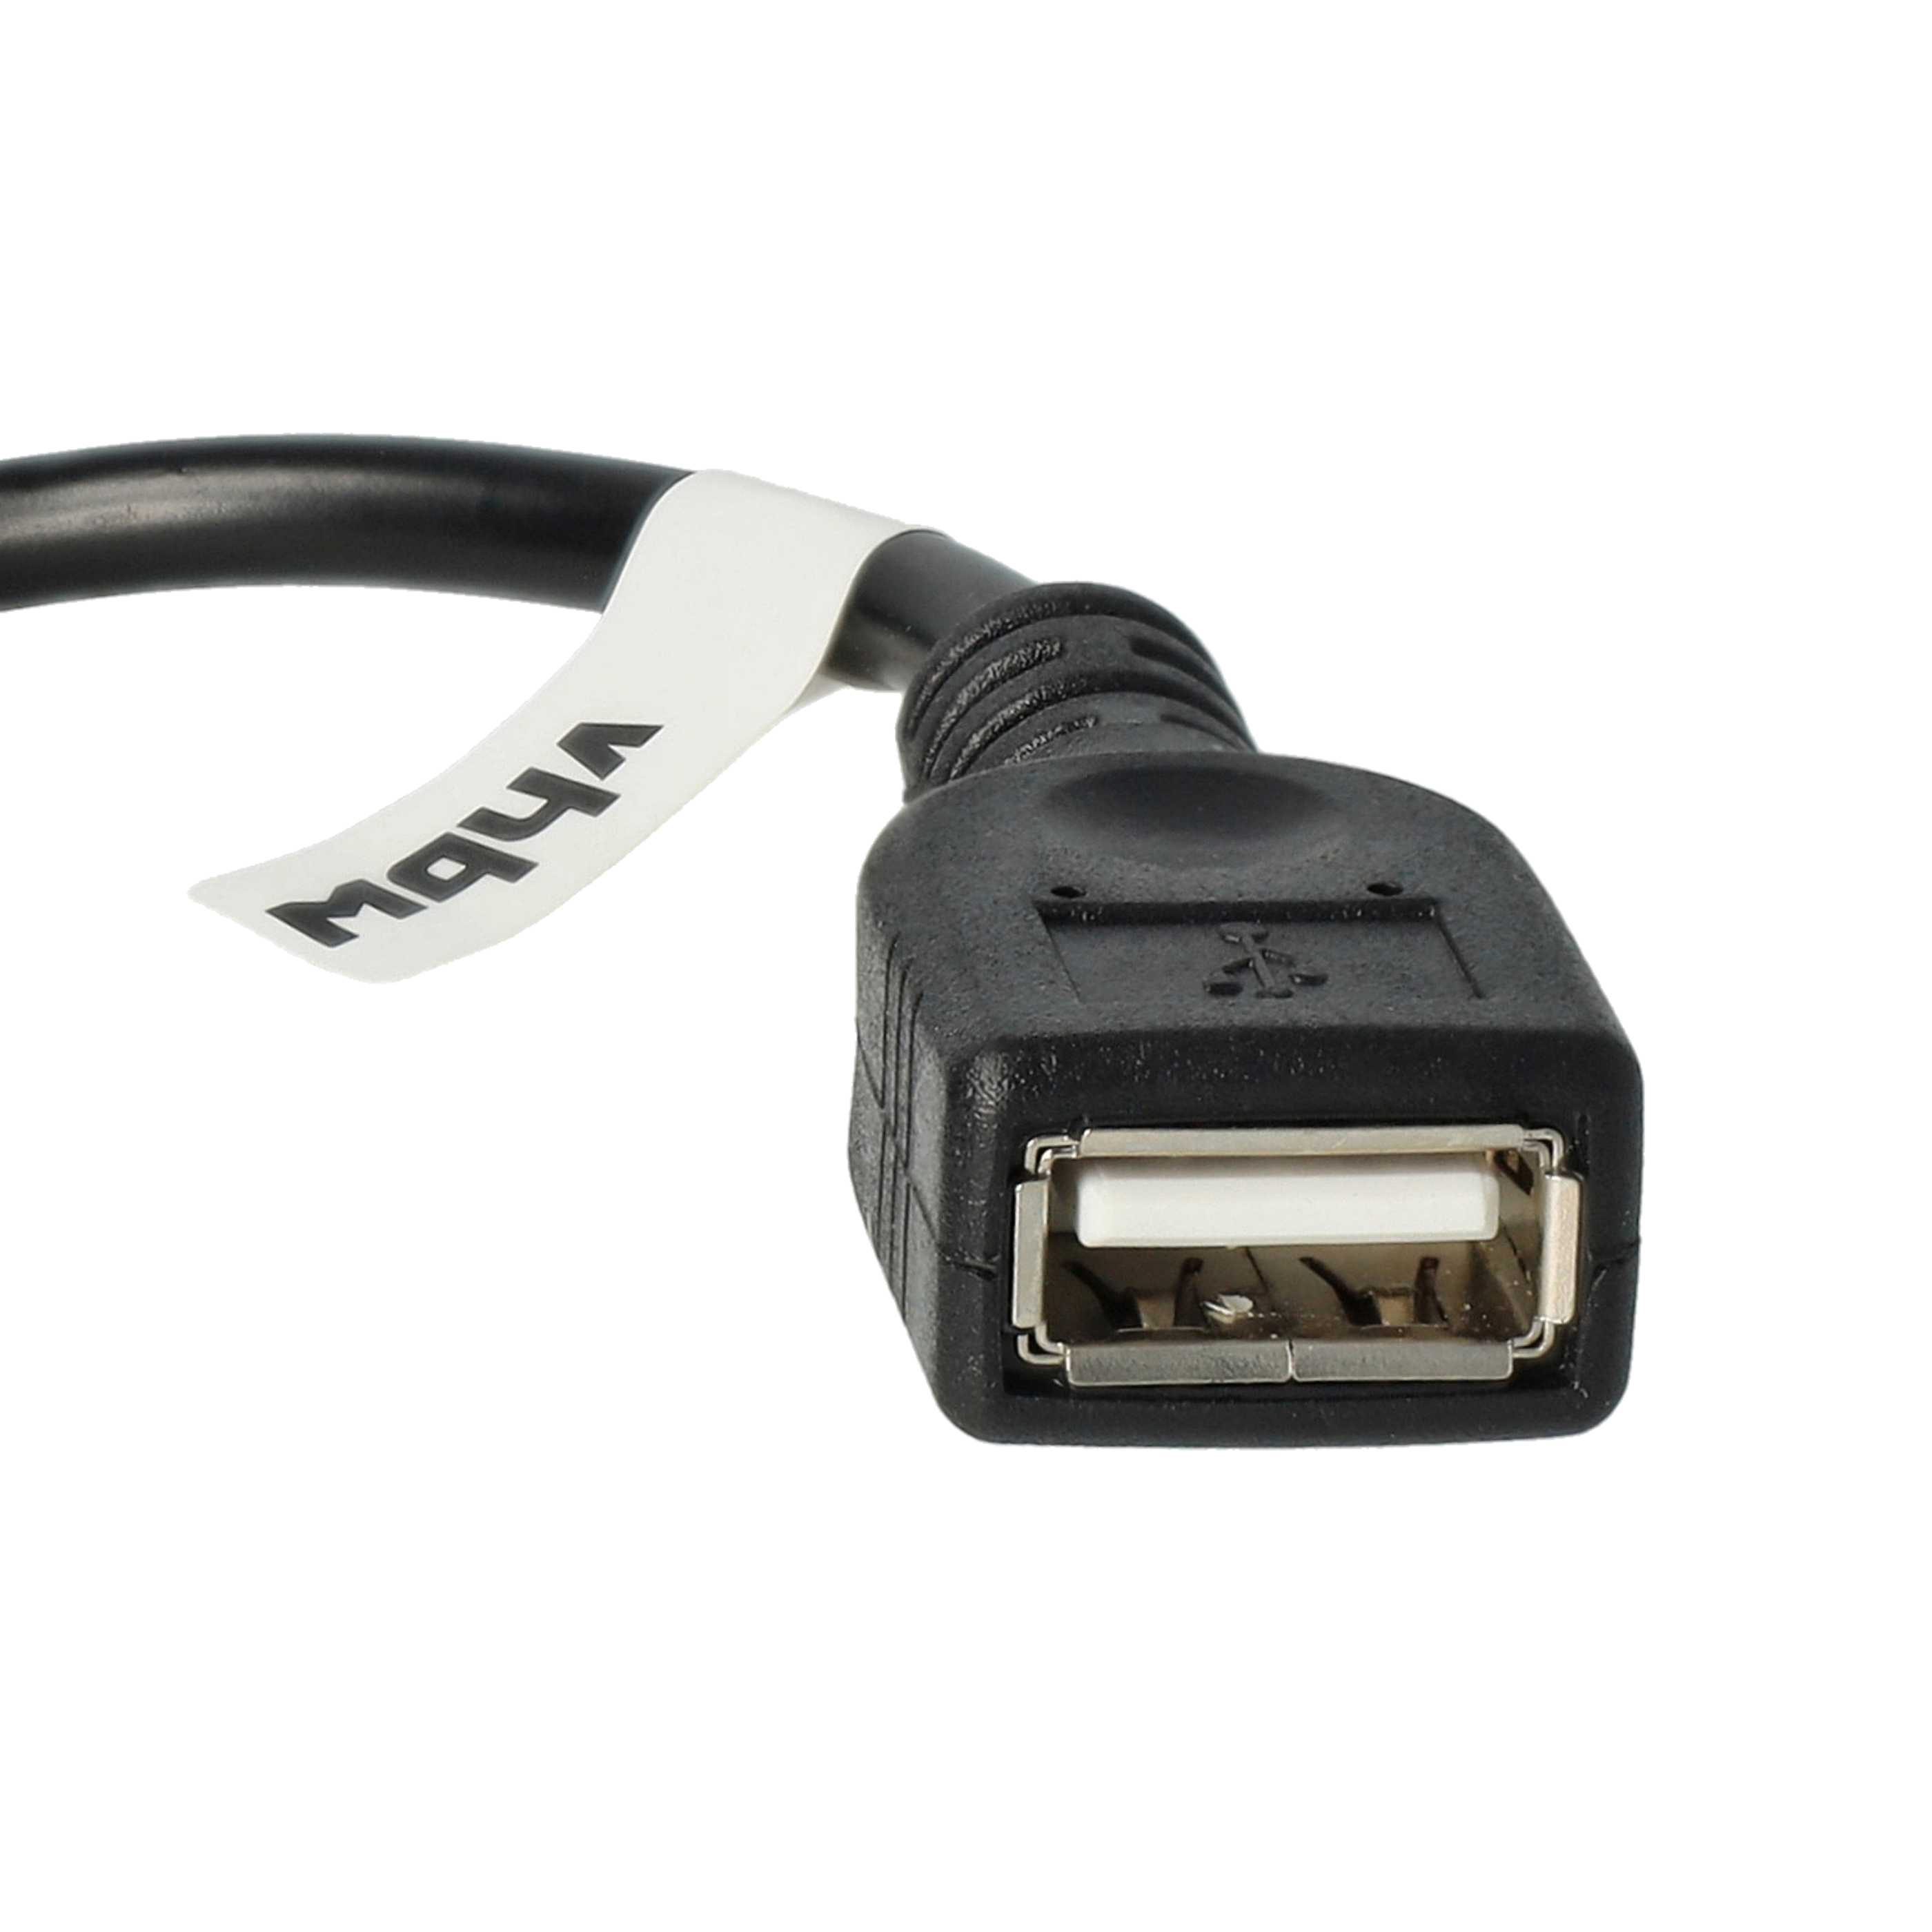 Adaptador OTG Micro-USB a USB (hembra) ángulo 90° para smartphones, tablets, computadora 